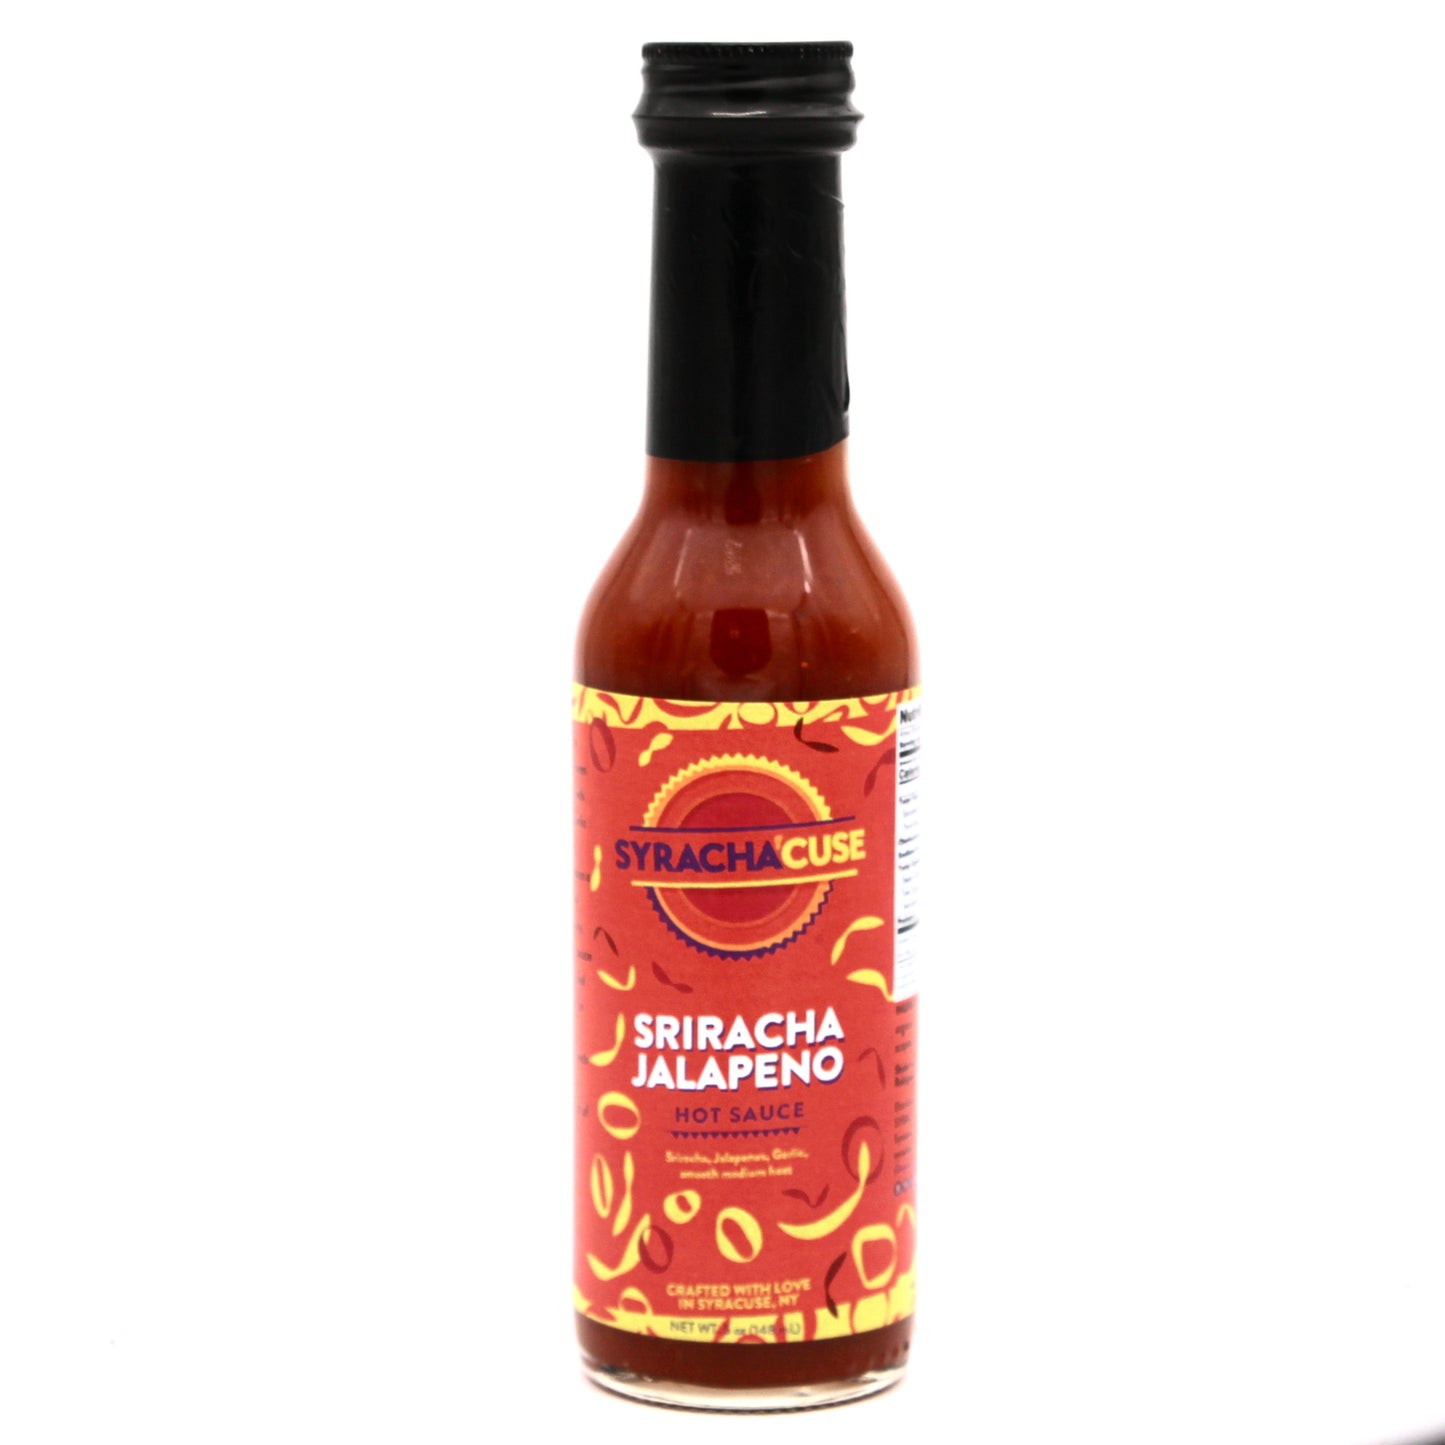 SRIRACHA JALAPENO, The Sriracha Sauce you’ve been searching for!